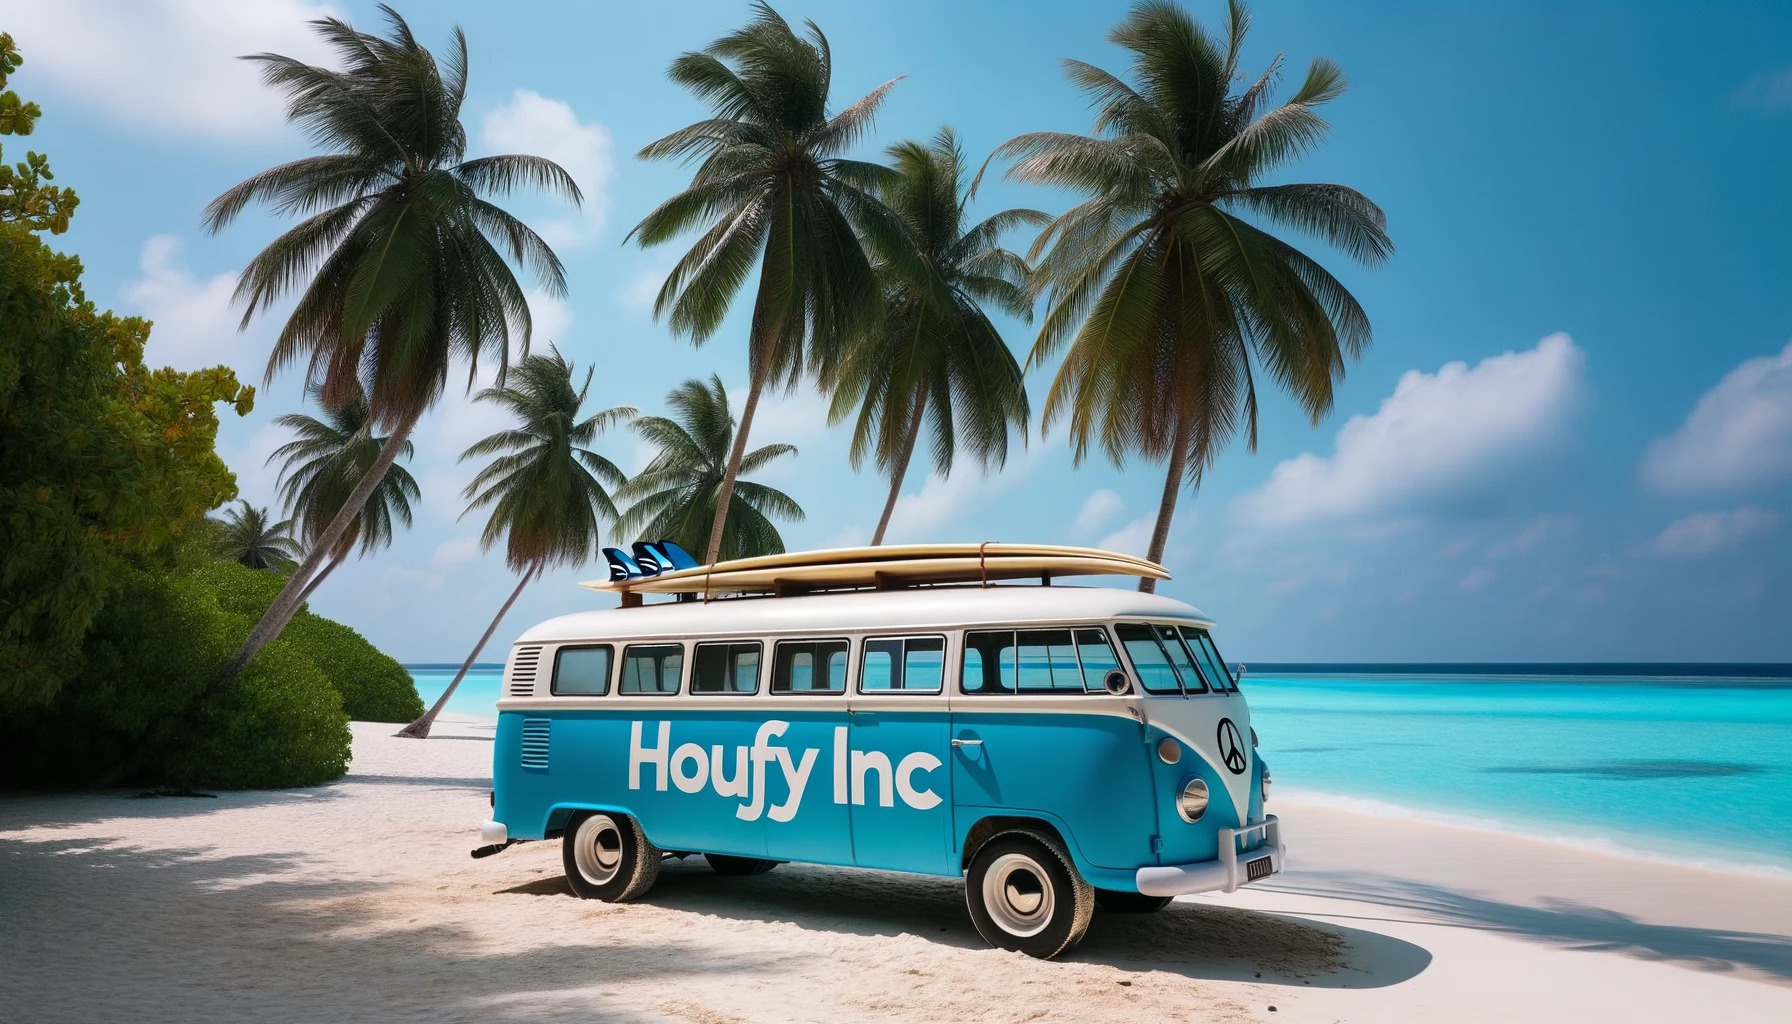 Houfy vacation rental properties